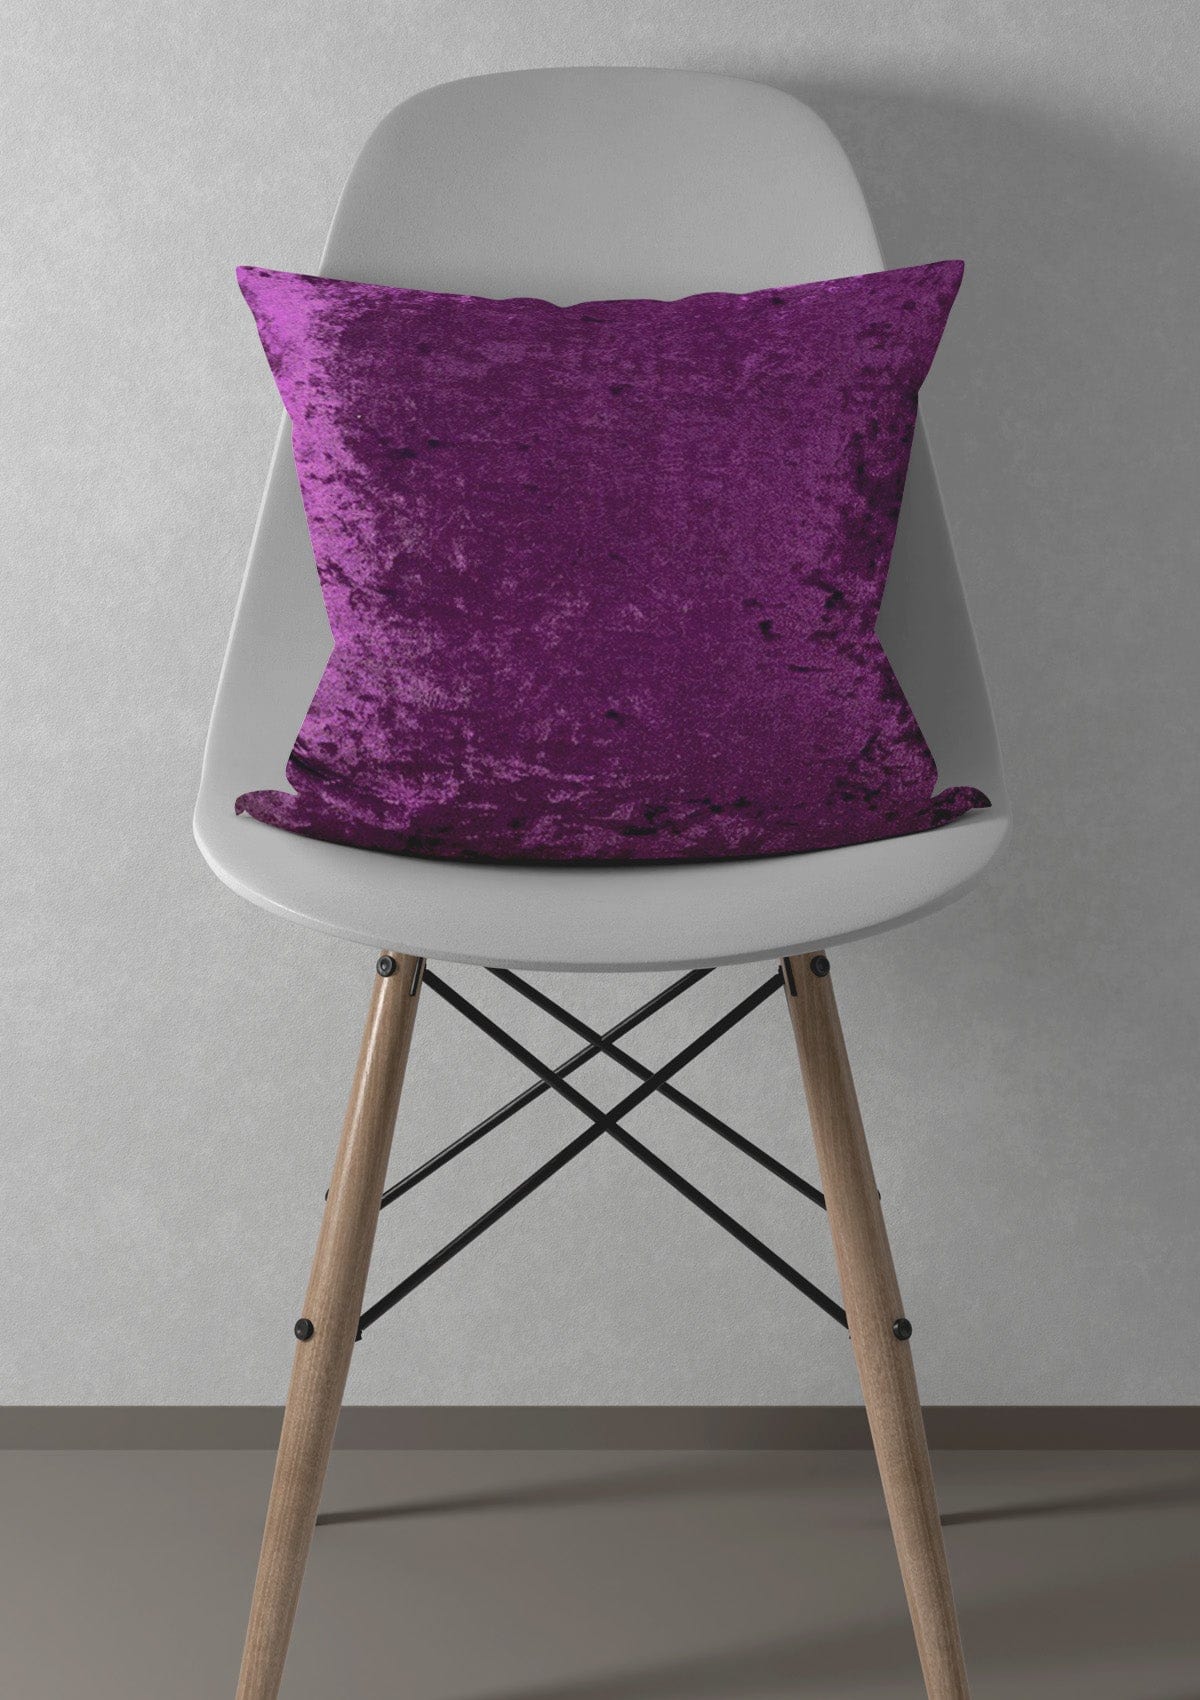 Purple Crushed Velvet Cushion Covers